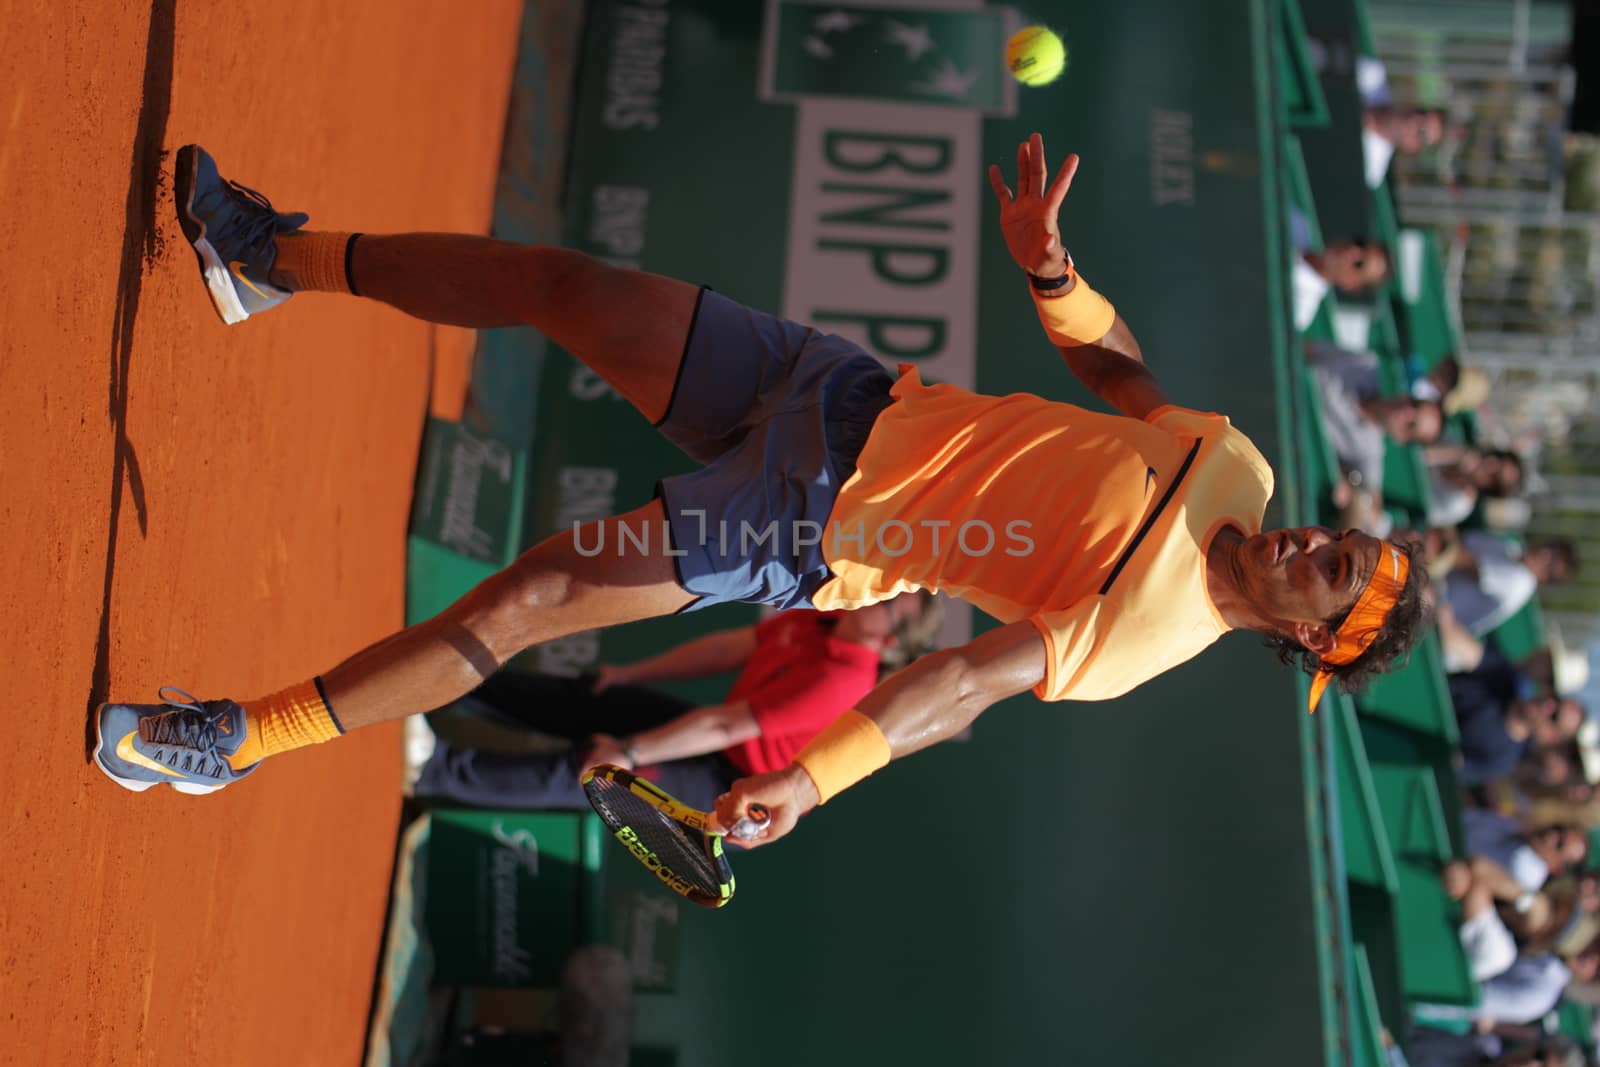 MONACO, Monte-Carlo: Spain's Rafael Nadal returns a shot to Switzerland's Stan Wawrinka during their tennis match at the Monte-Carlo ATP Masters Series tournament on April 15, 2016 in Monaco. 